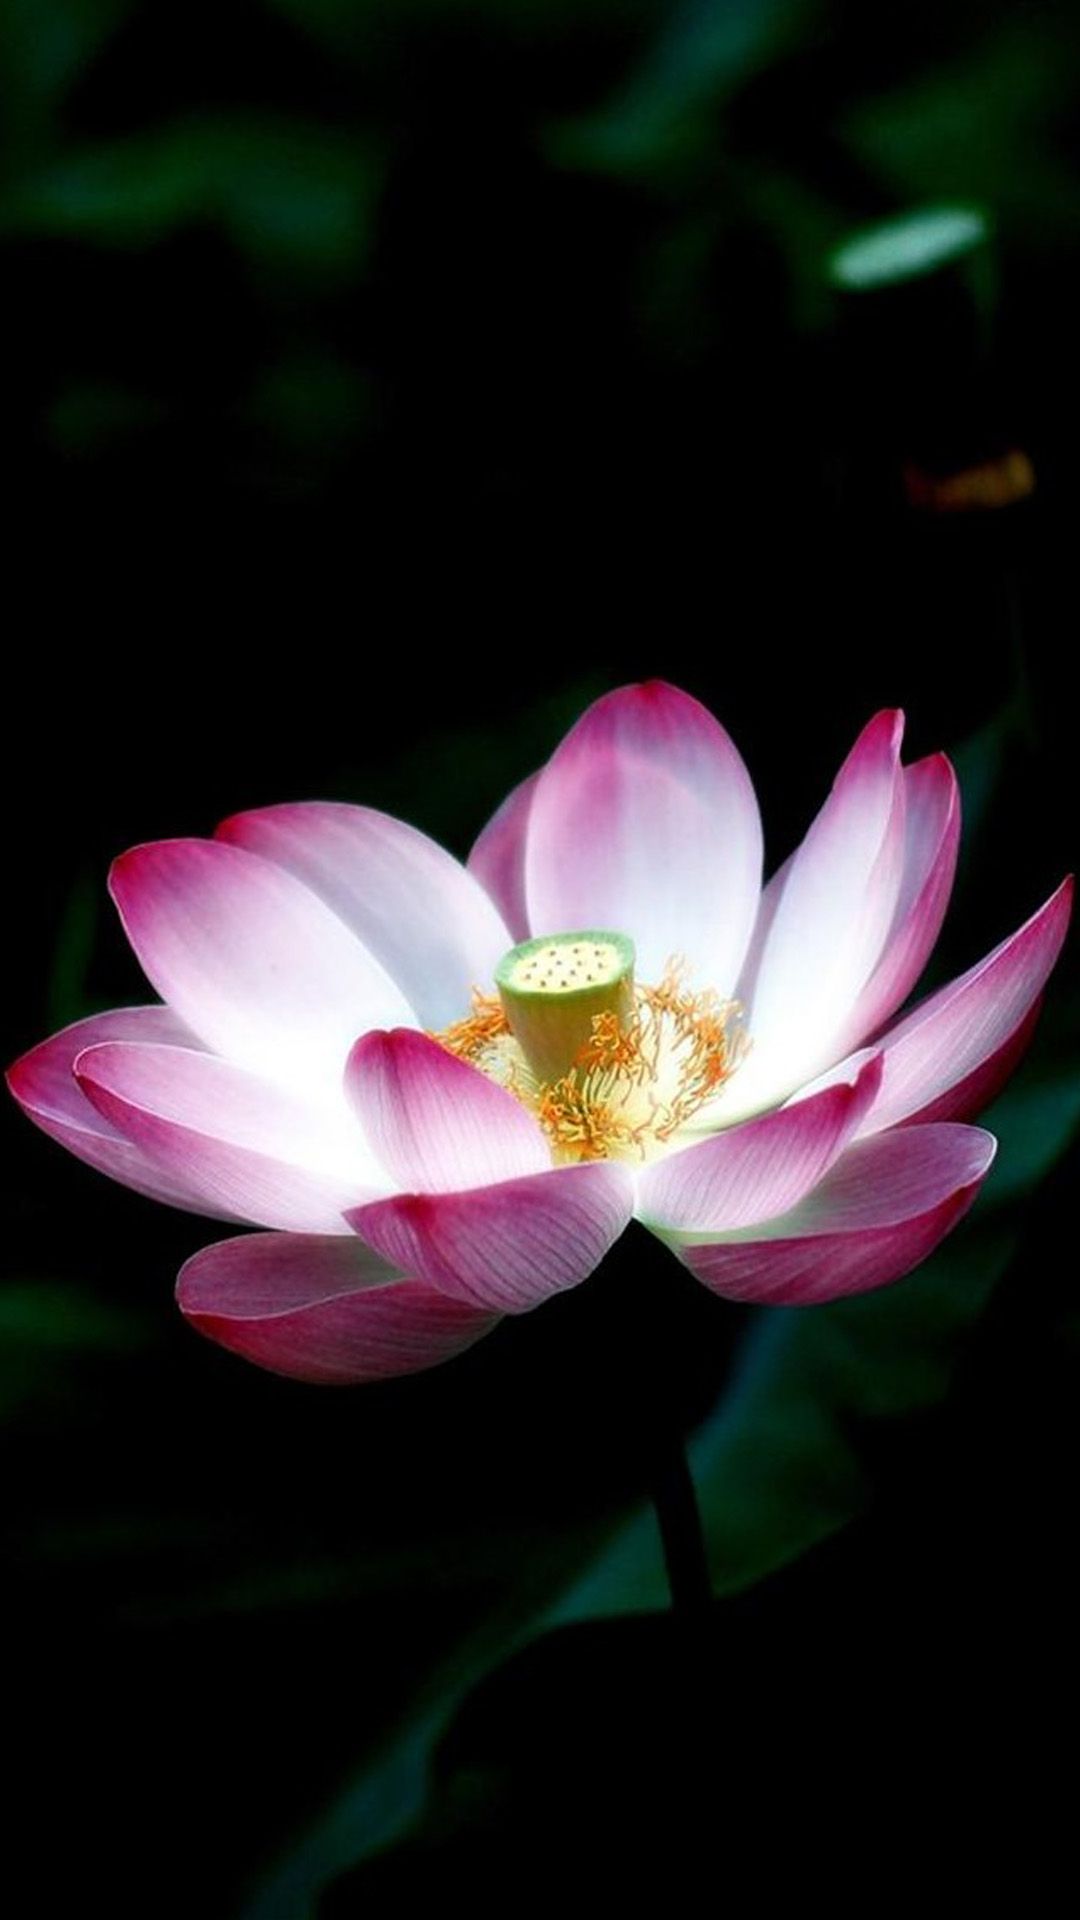 lotus flower iphone wallpaper,flower,sacred lotus,petal,flowering plant,lotus